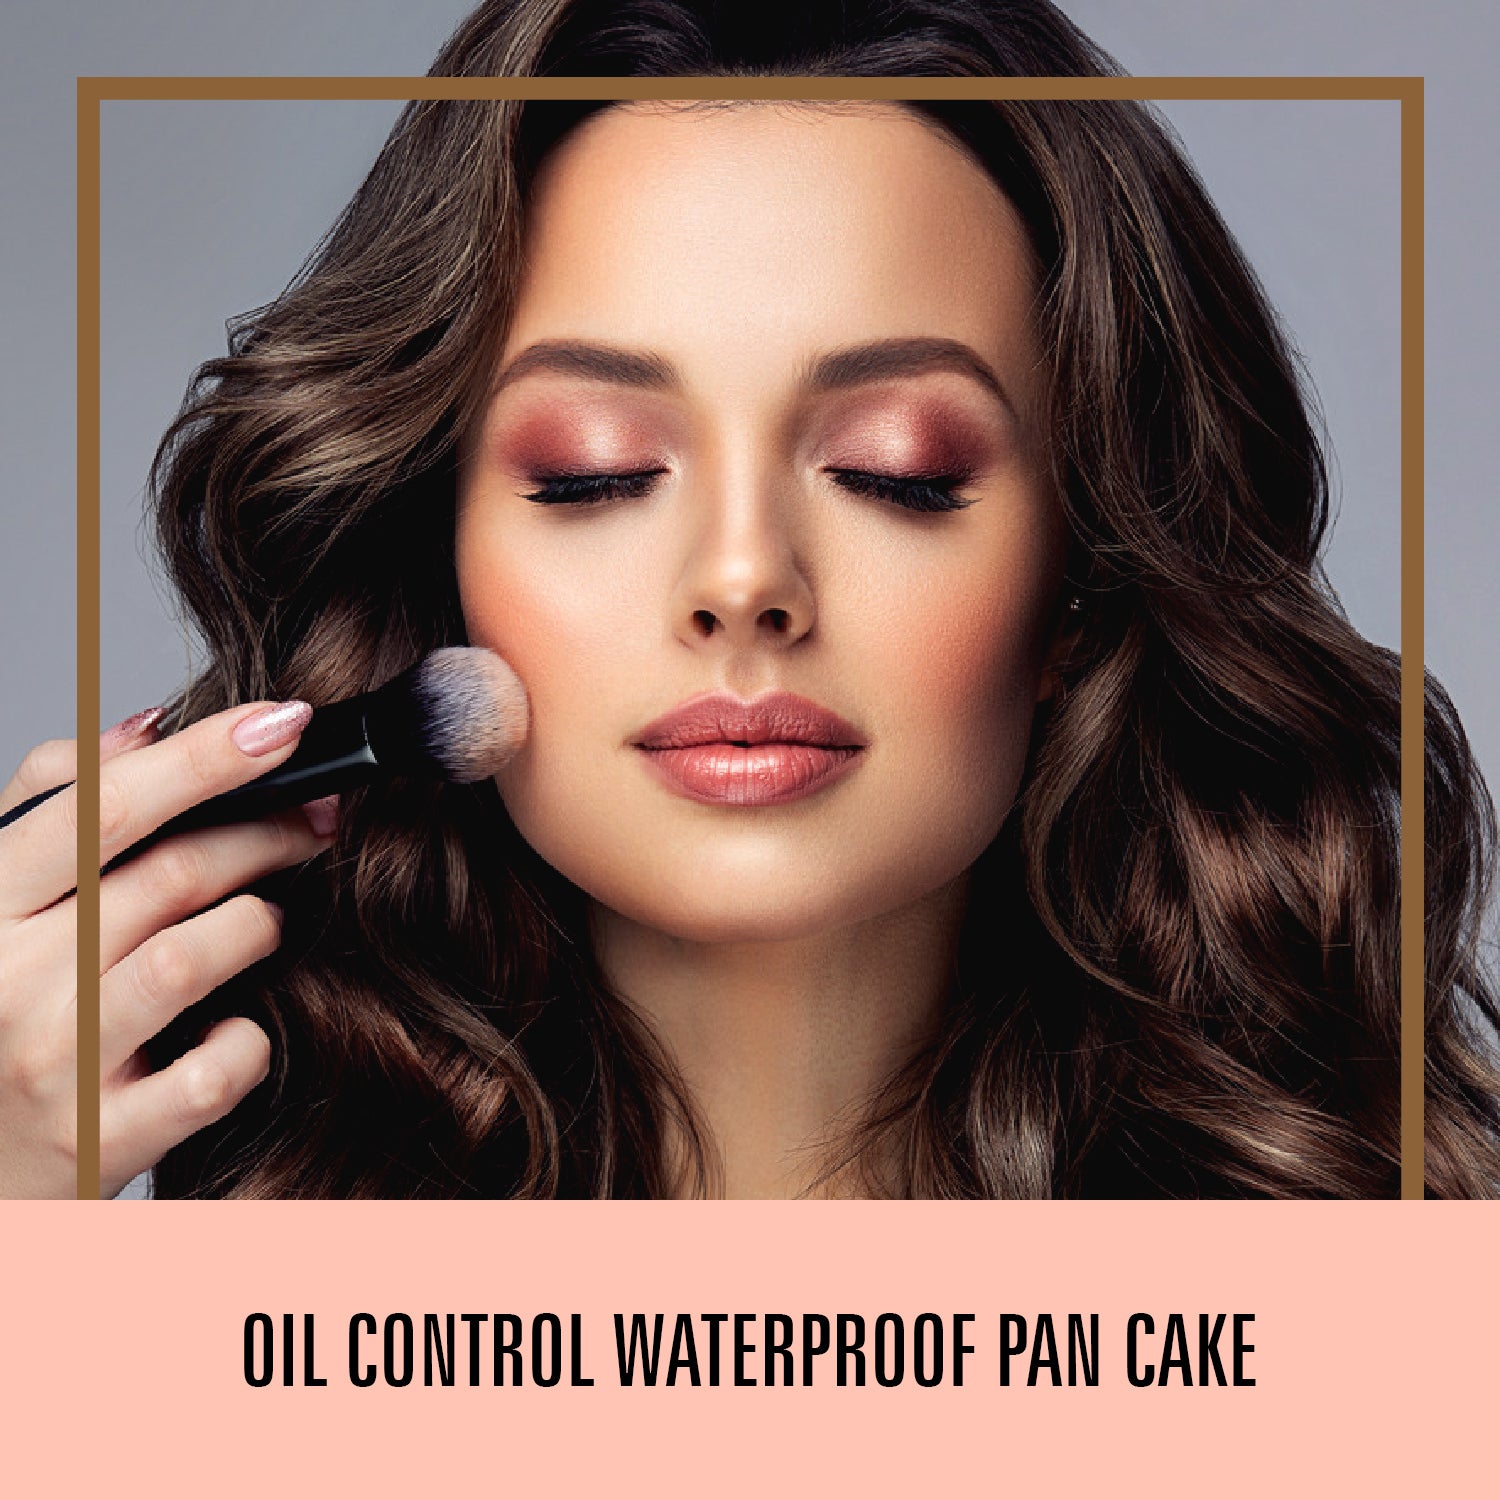 Oil Control Waterproof Pan Cake